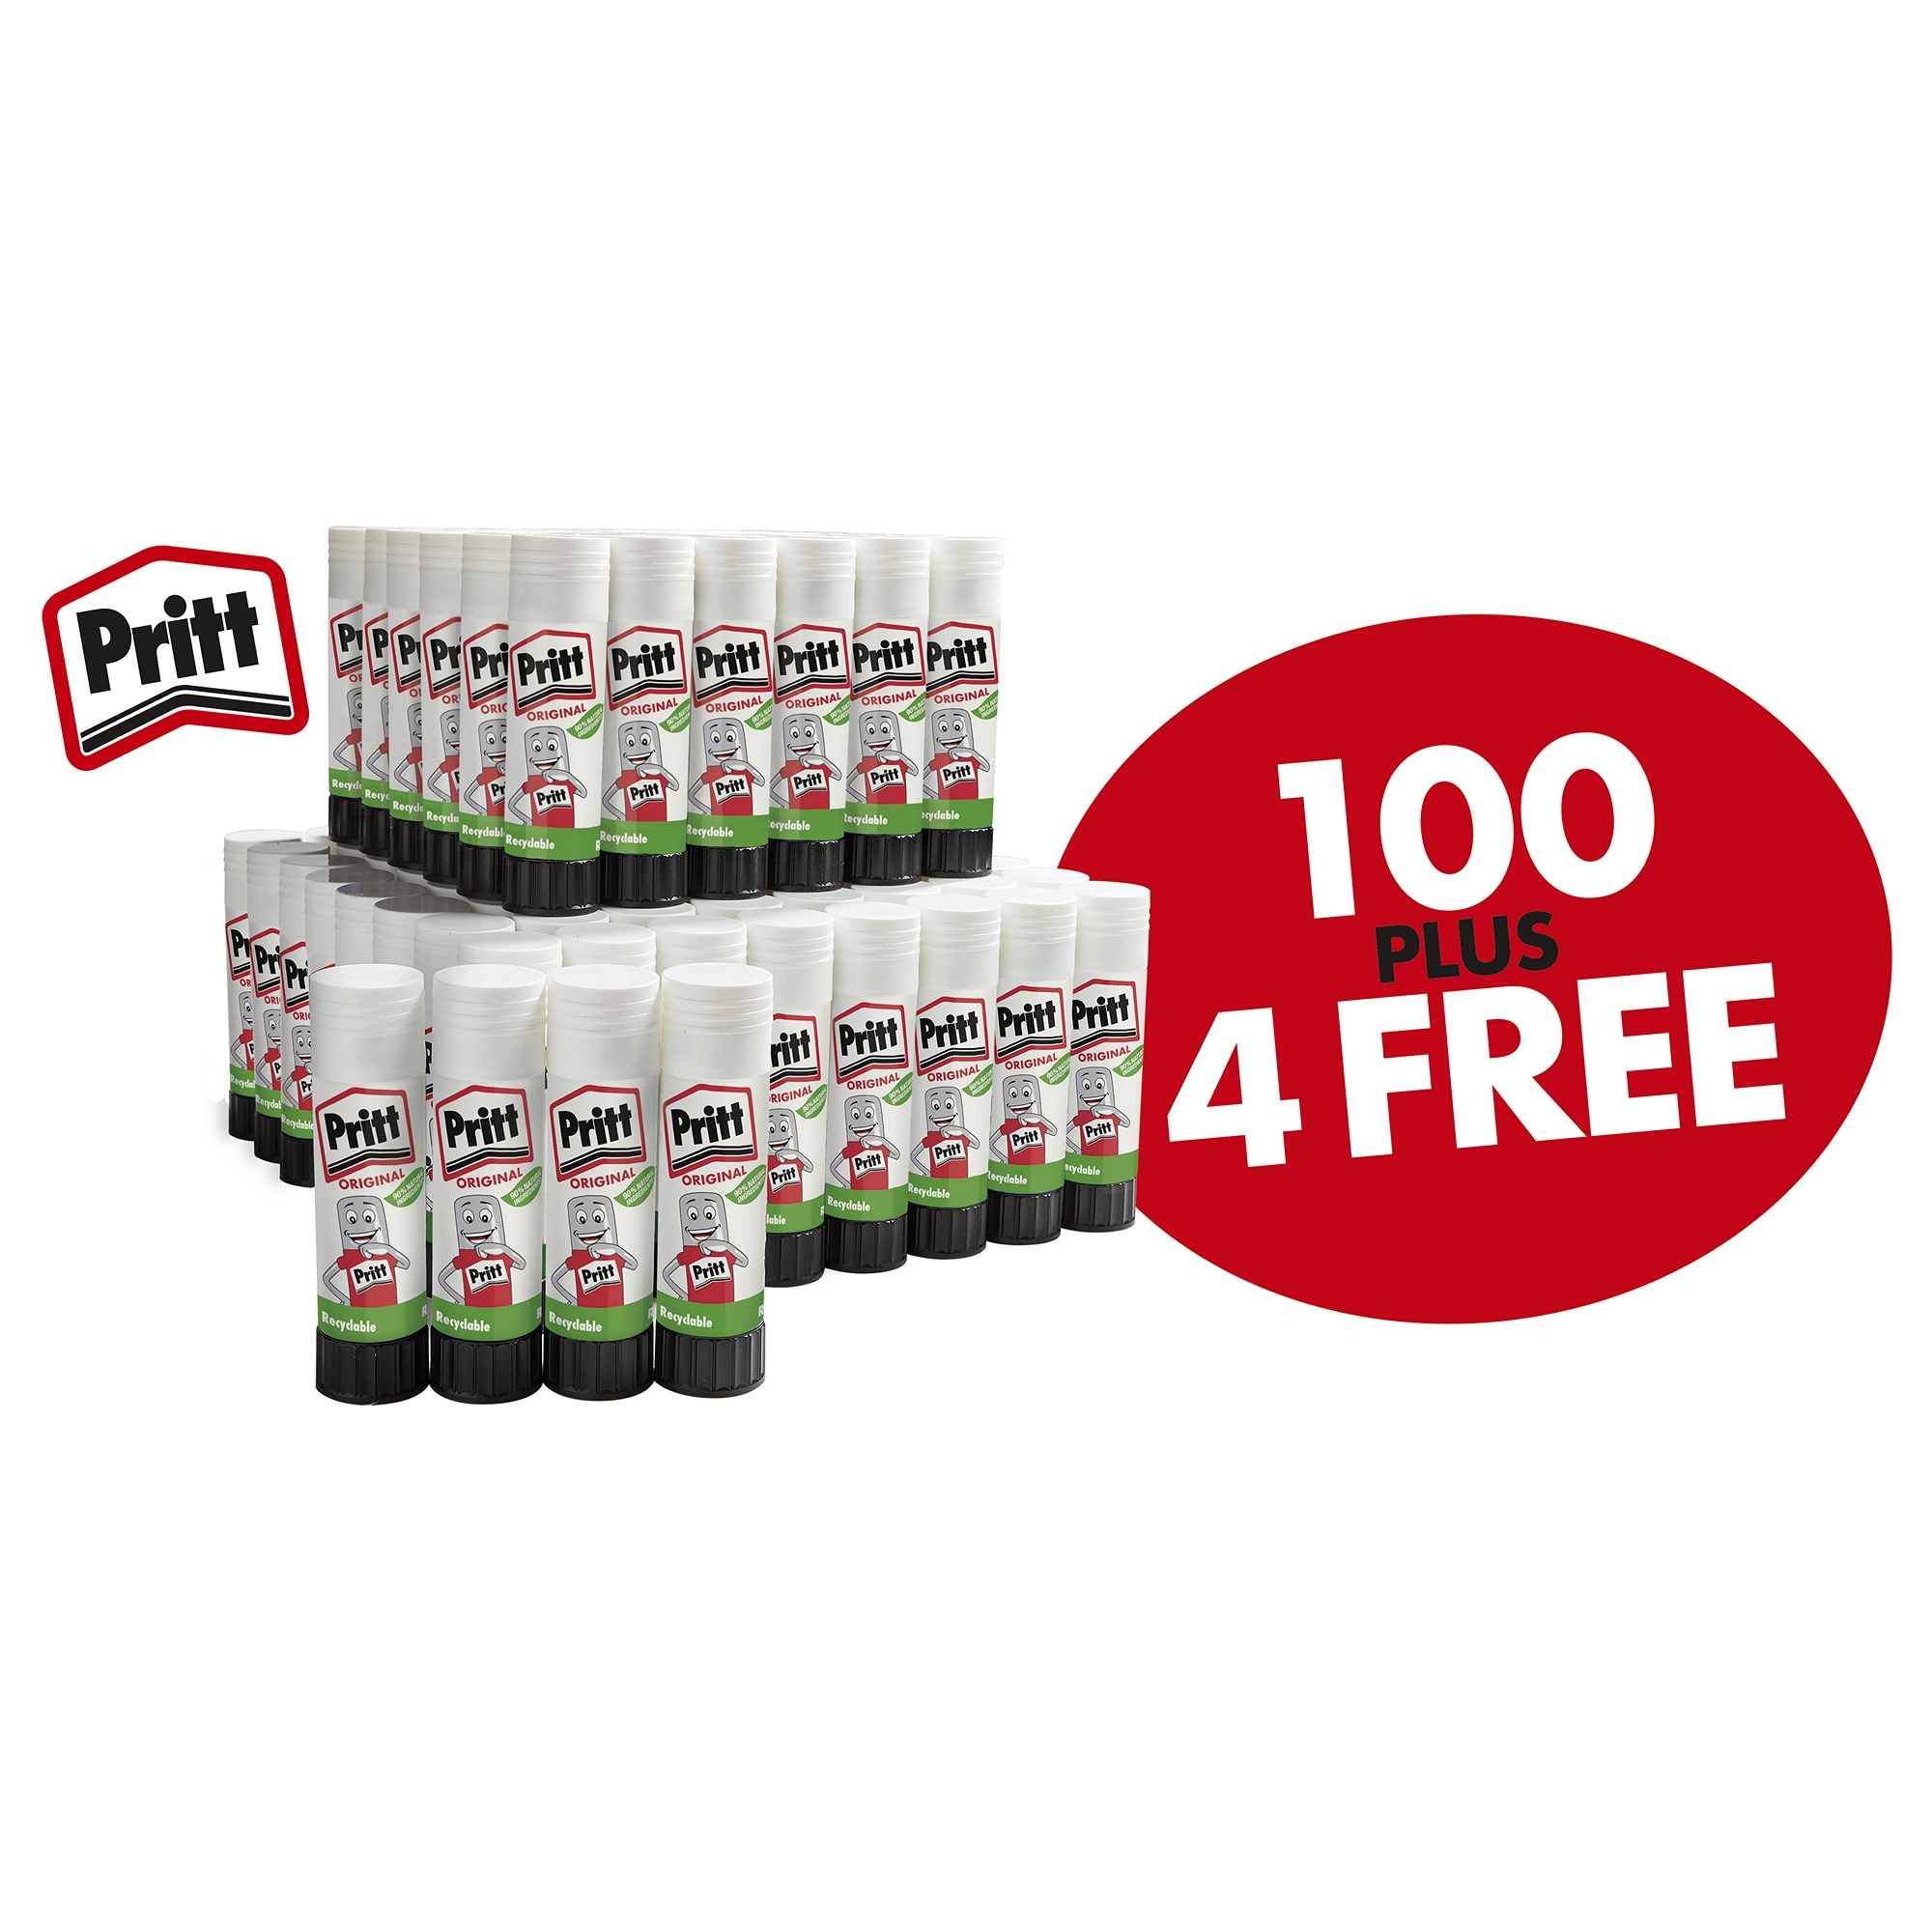 Pritt Stick 43g- Pack of 100 plus 4 FREE